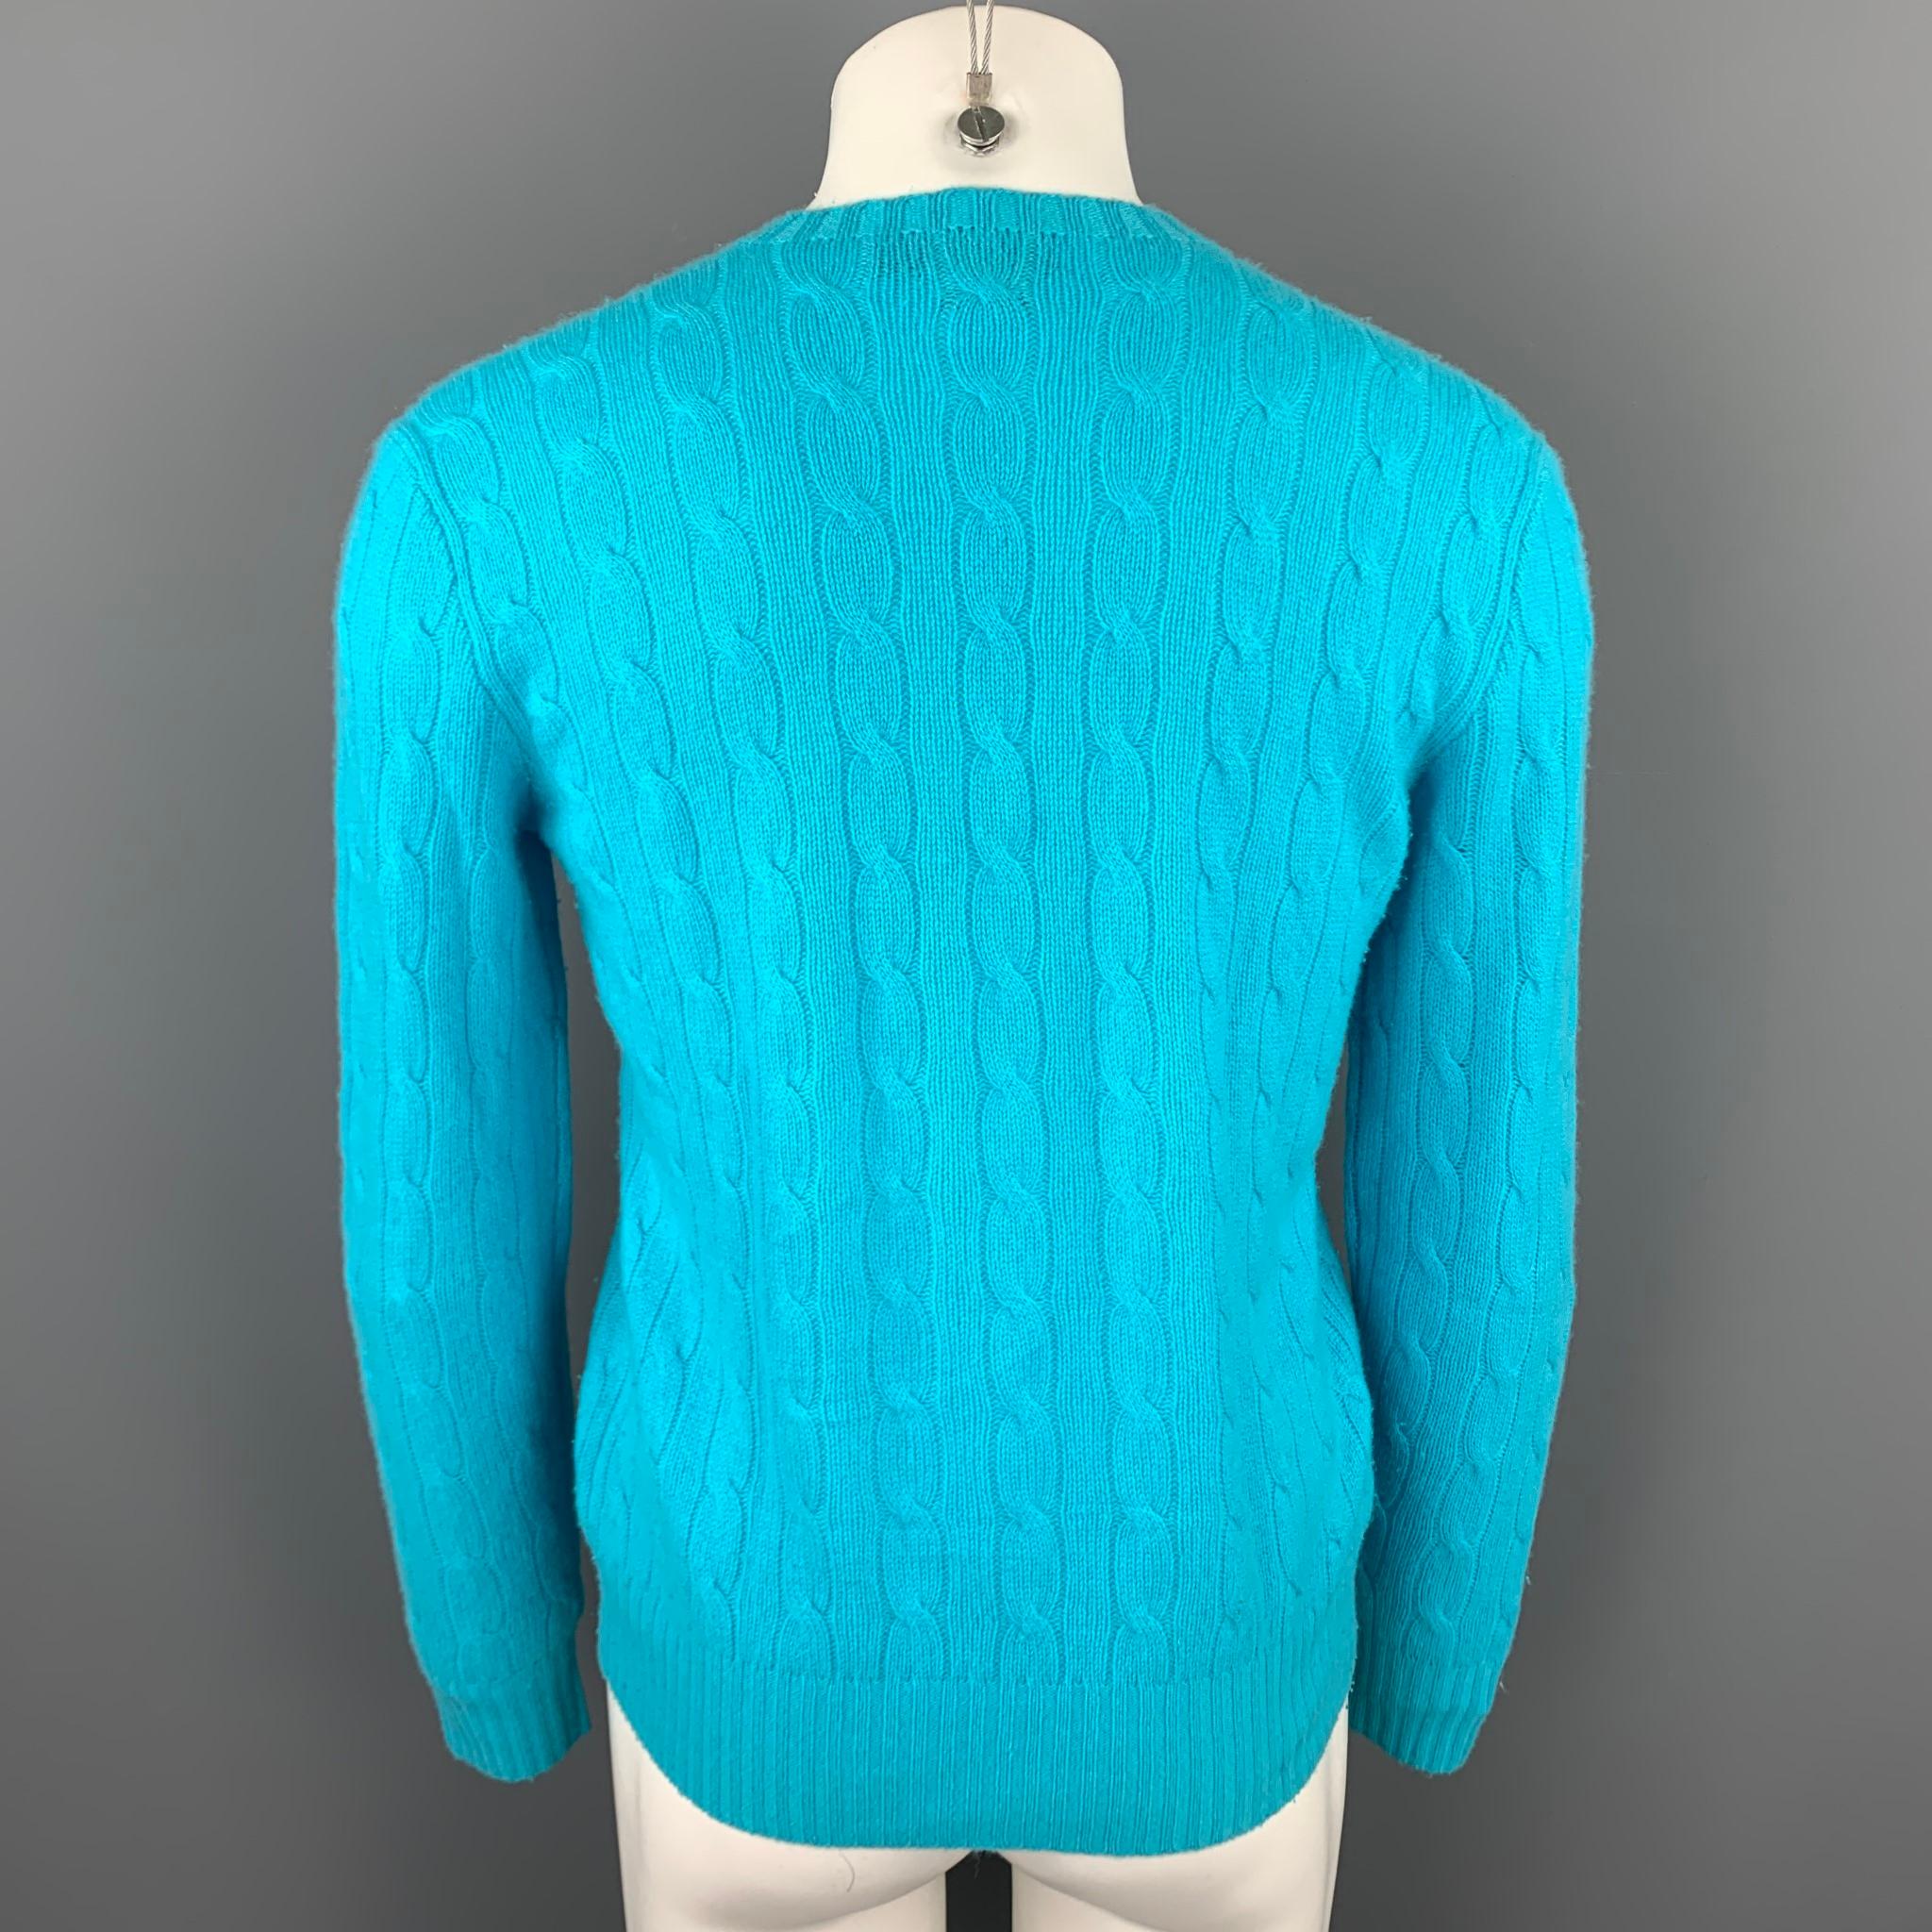 Blue POLO by RALPH LAUREN Size M Aqua Cable Knit Cashmere Crew-Neck Sweater